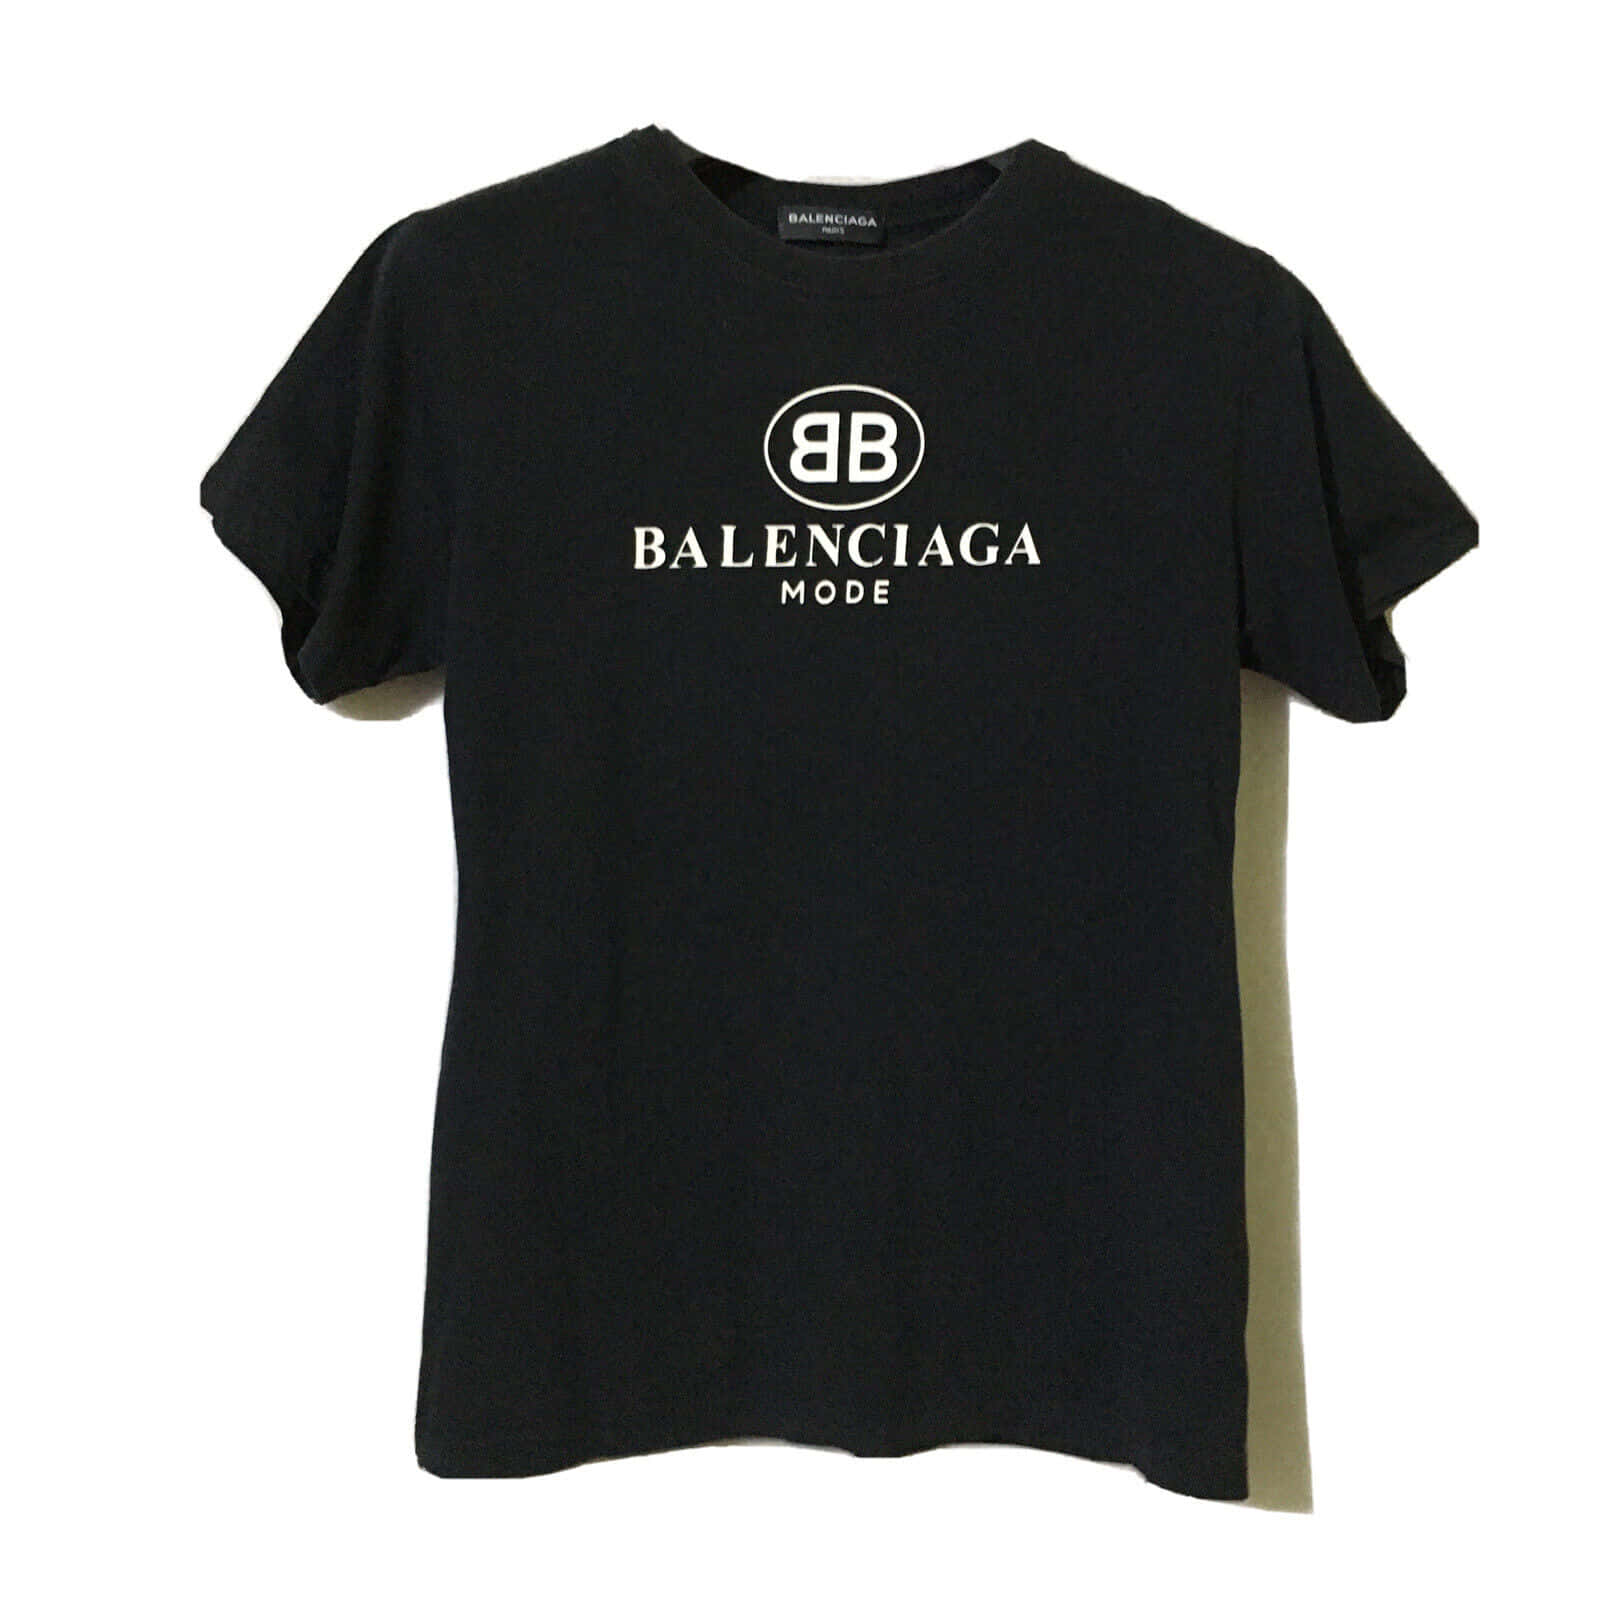 Drop the cool look with Balenciaga!